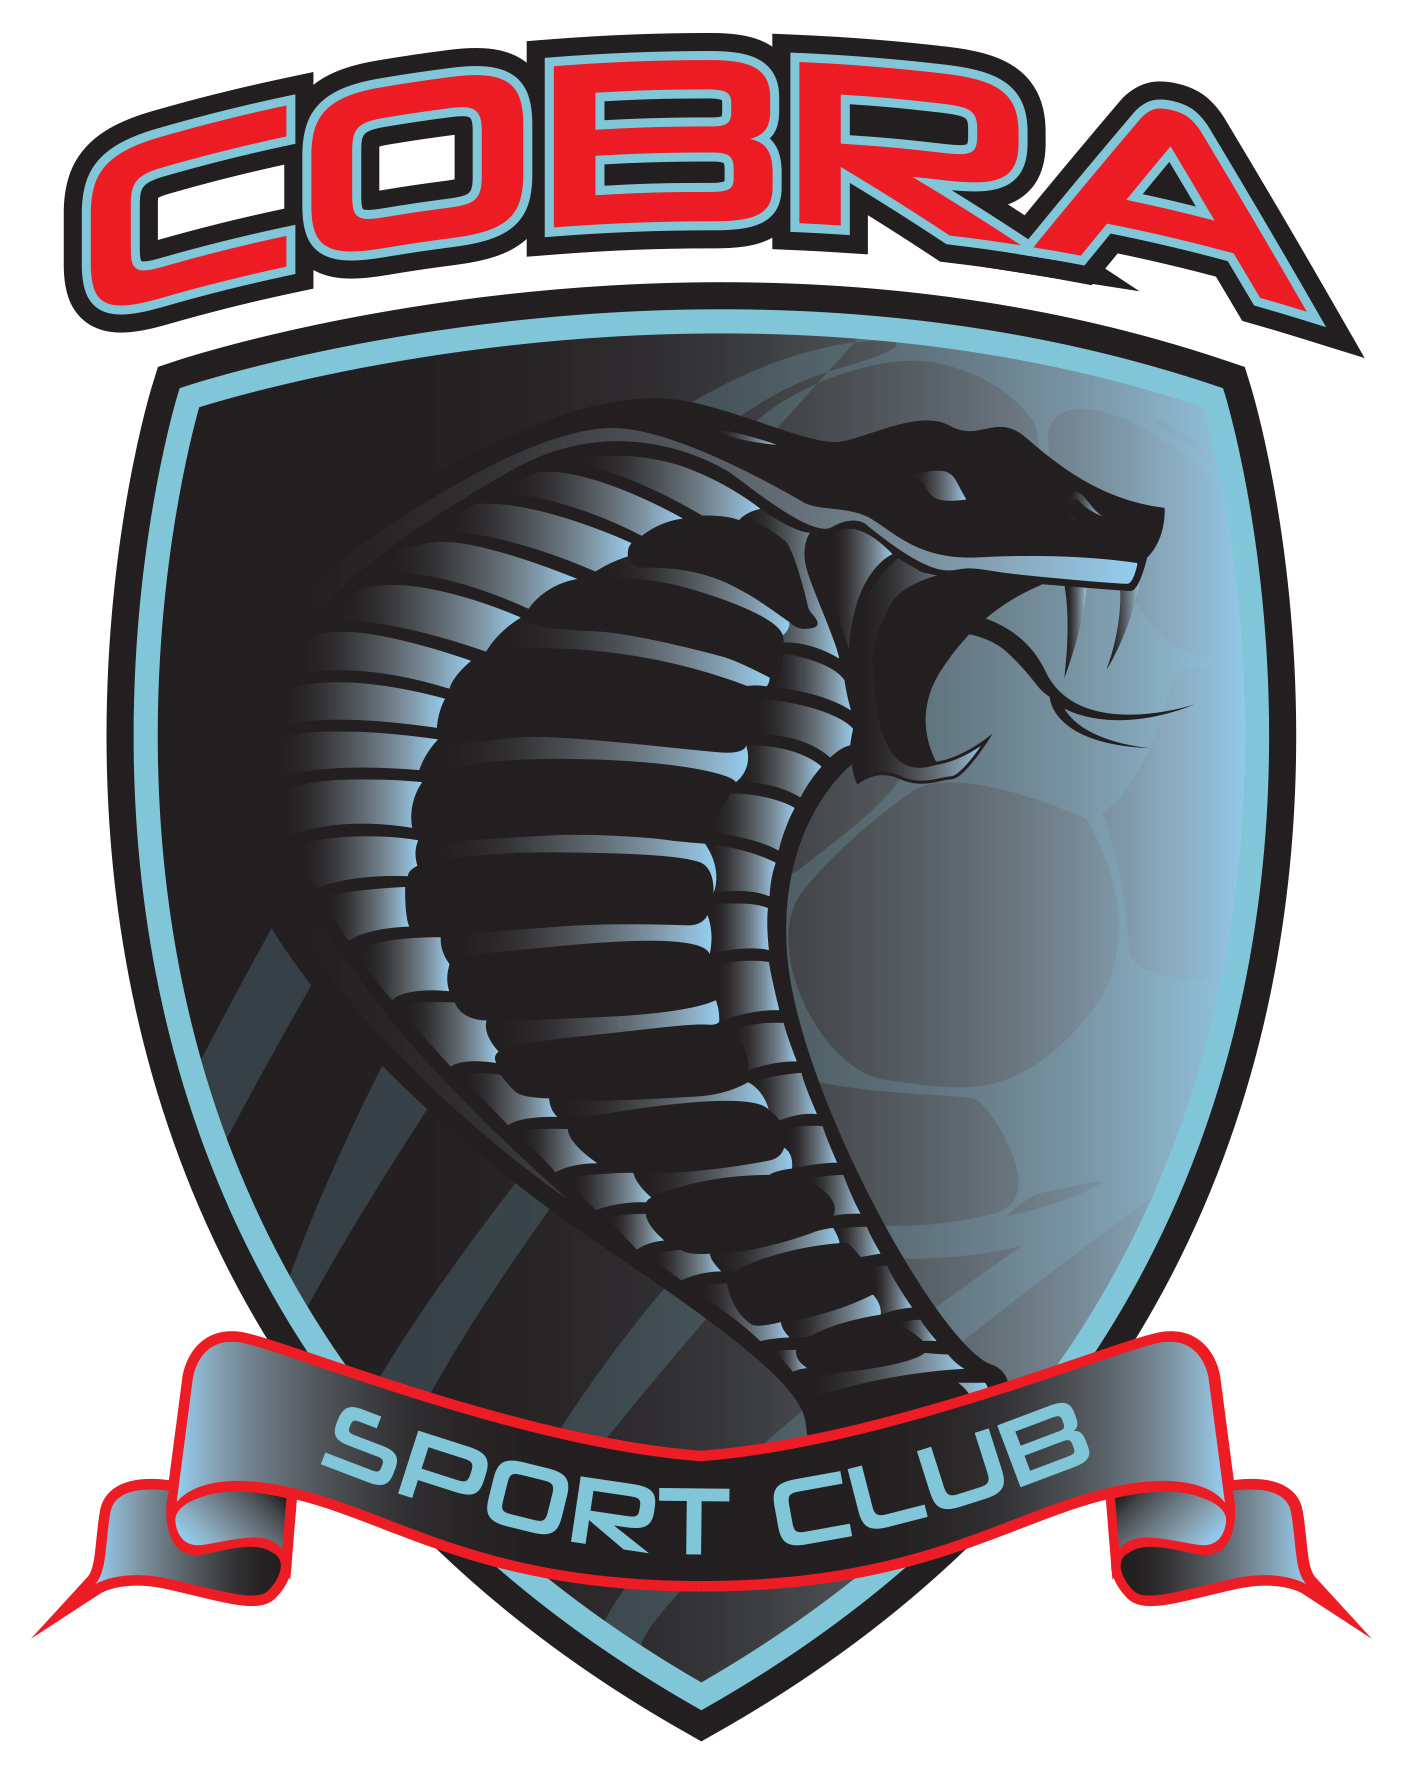 Cobras Sports Club team badge